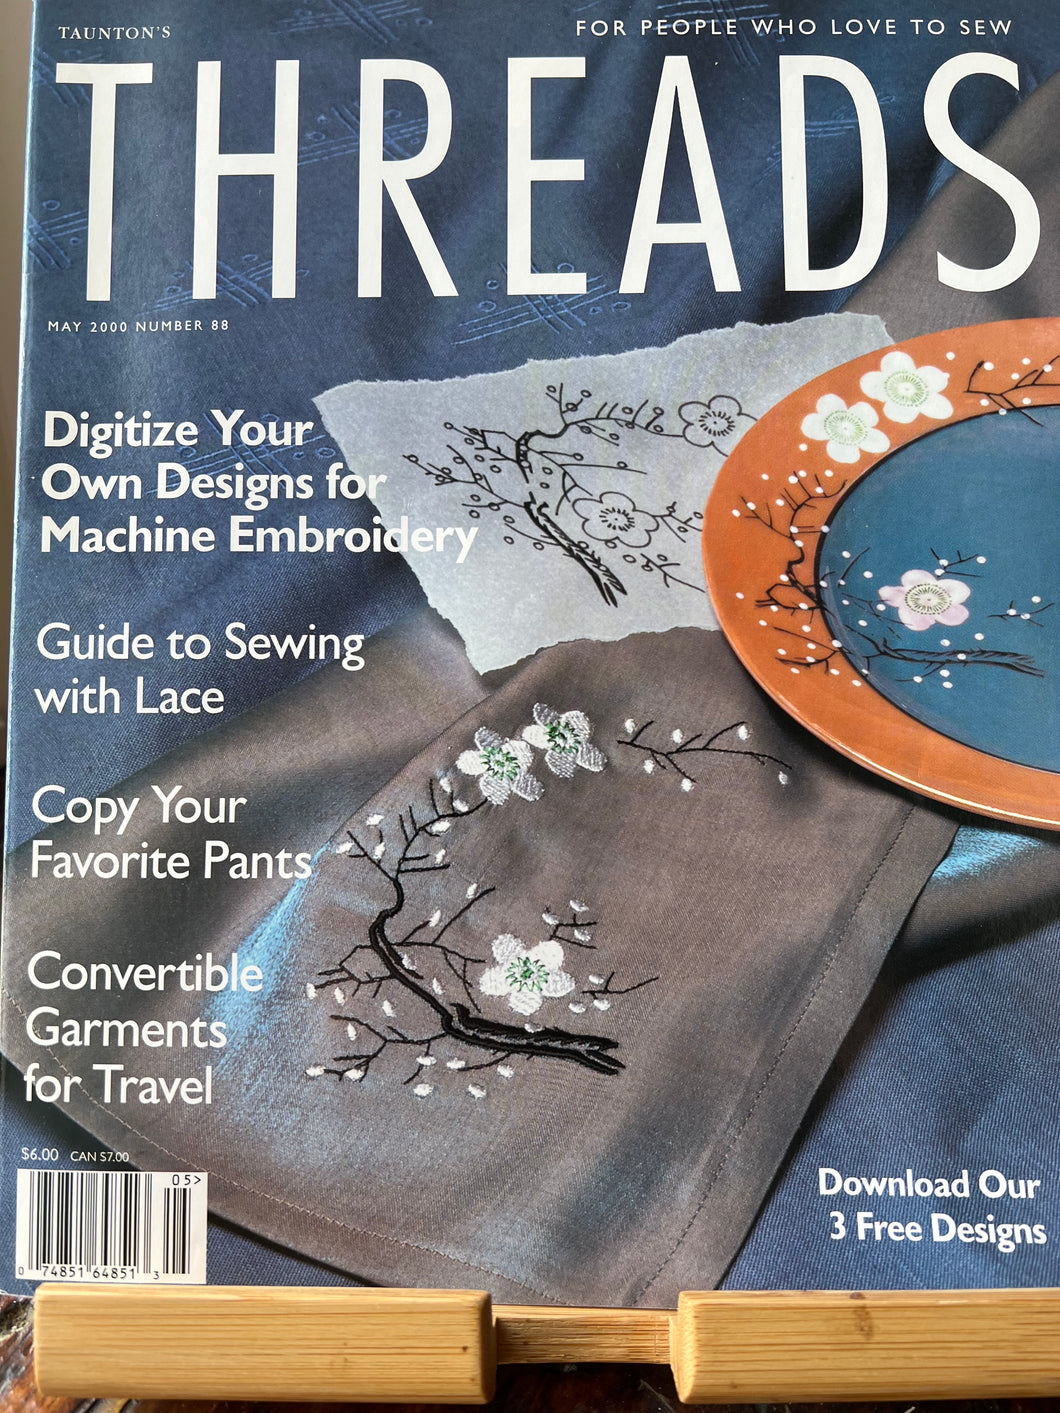 Threads Magazine Issue #88 May 2000